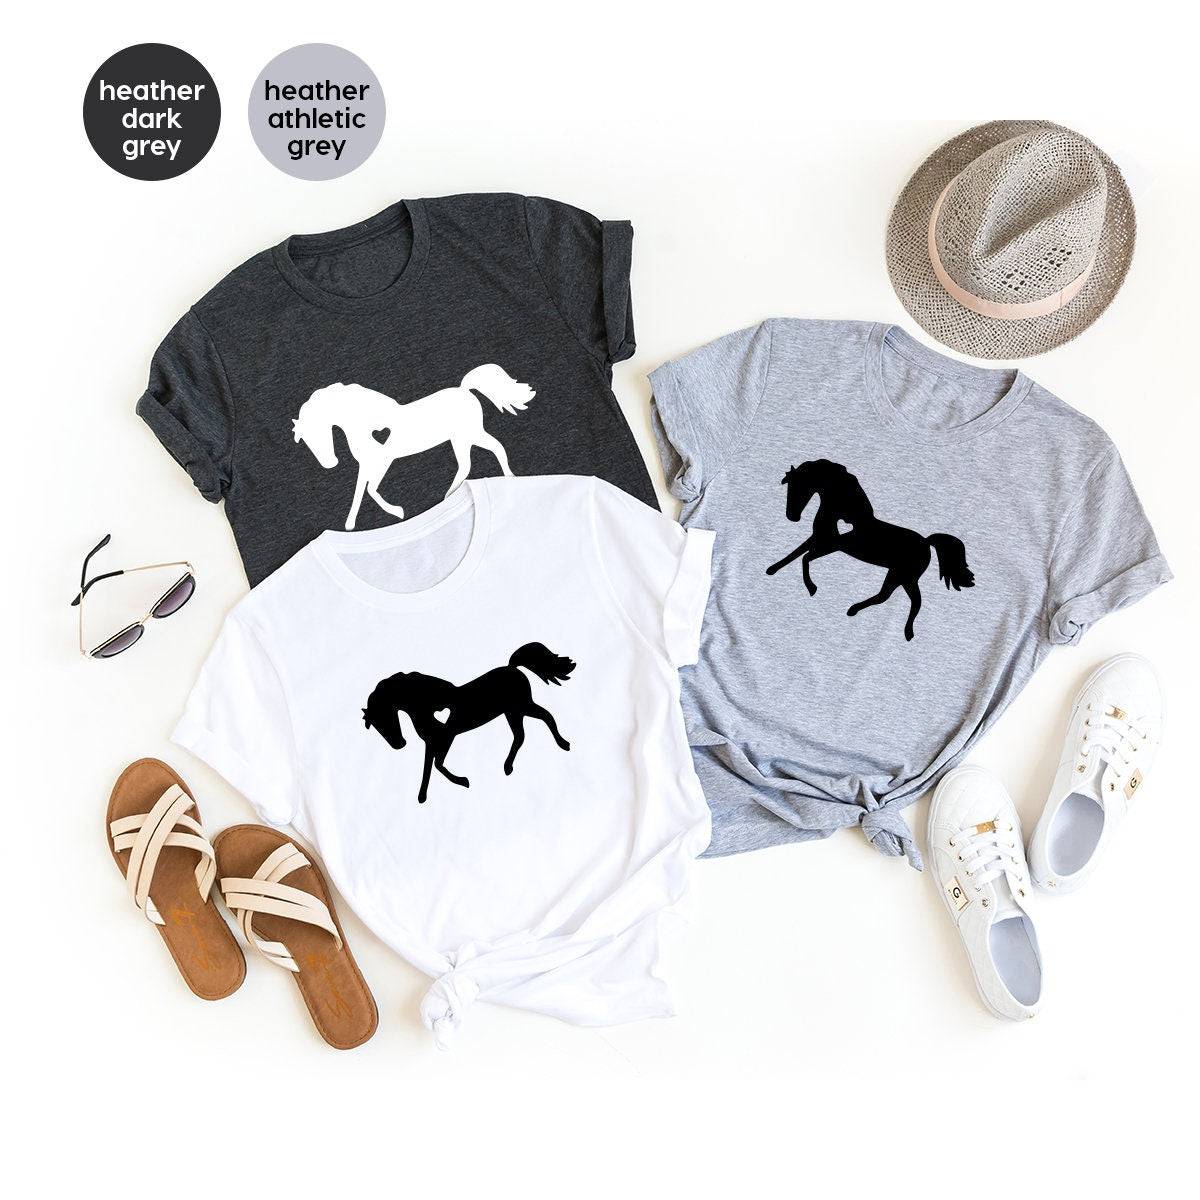 Horse Lover Shirt, Horse Lover T Shirt, Horse With Heart Tee, Horse T Shirts, Horse Lover Gift, Vet Shirt, Gift For Horse Lover, Horse Tee - Fastdeliverytees.com